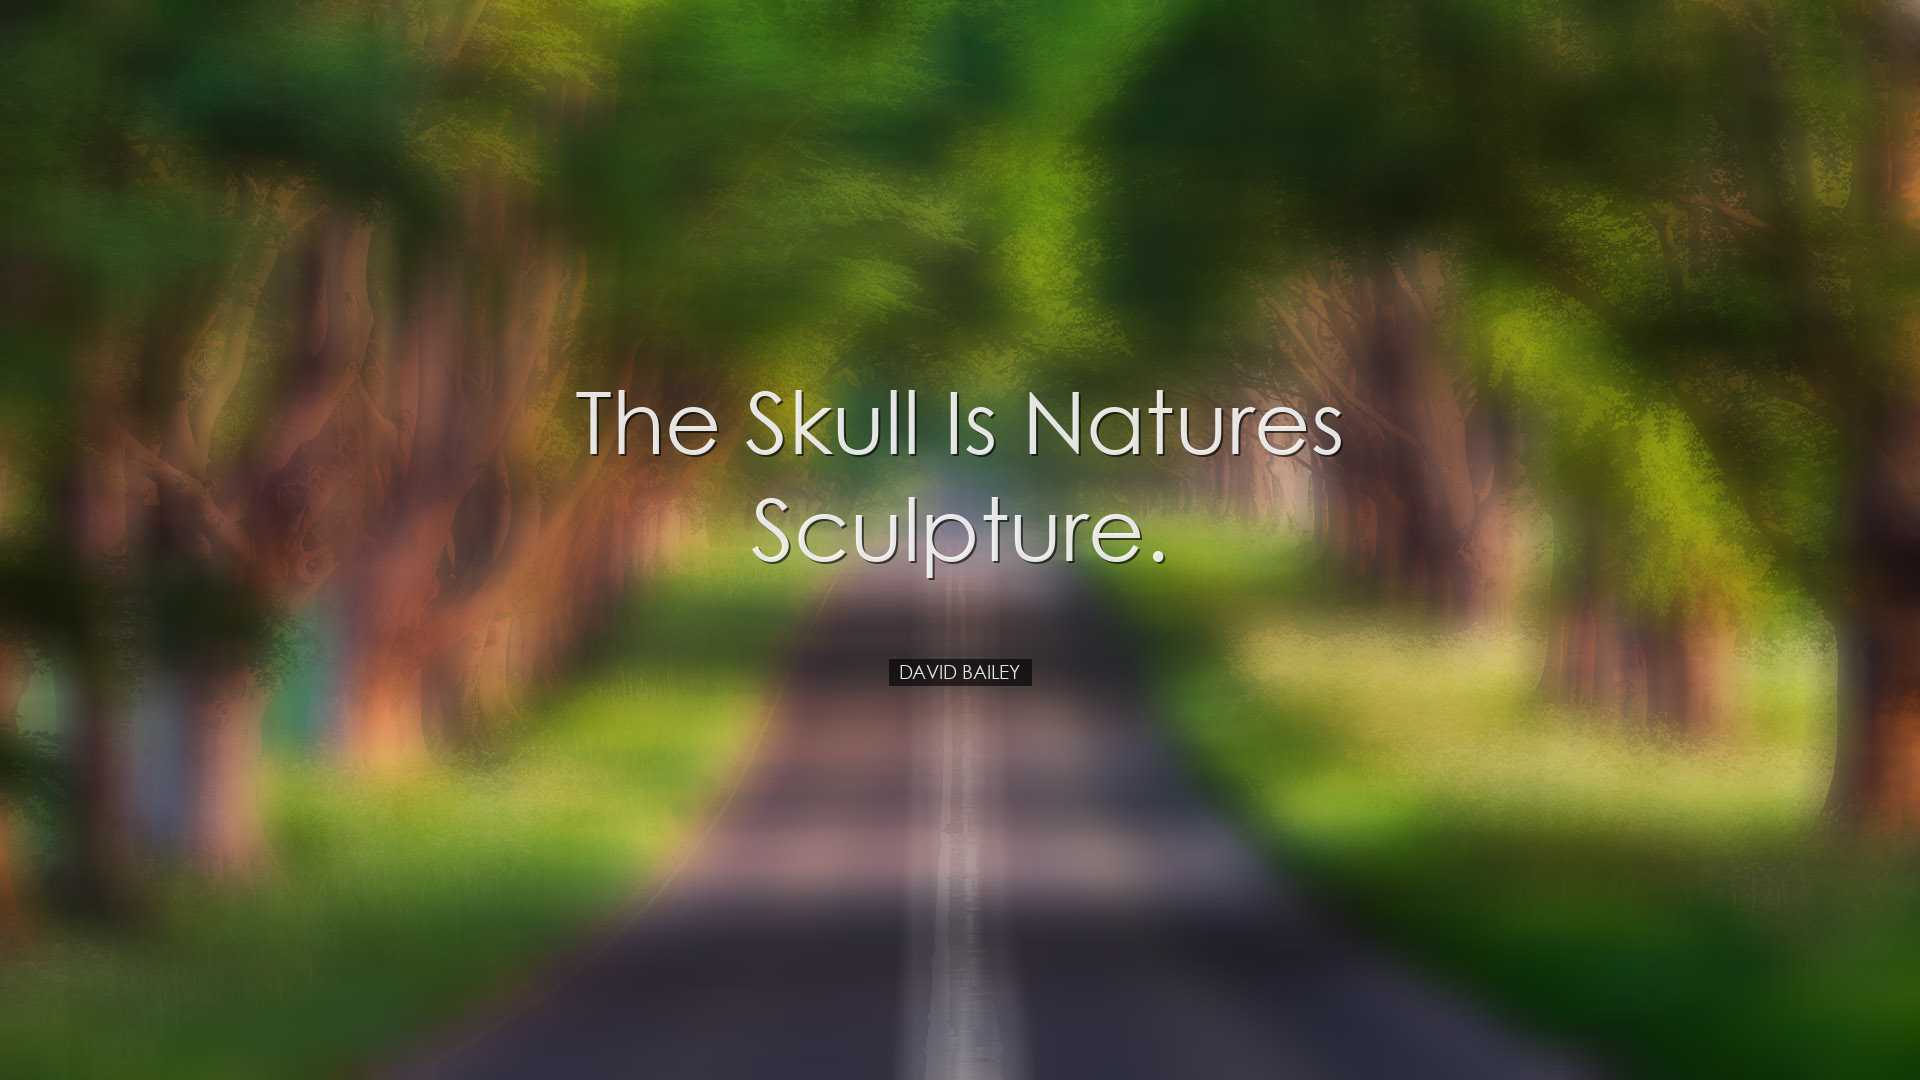 The skull is natures sculpture. - David Bailey